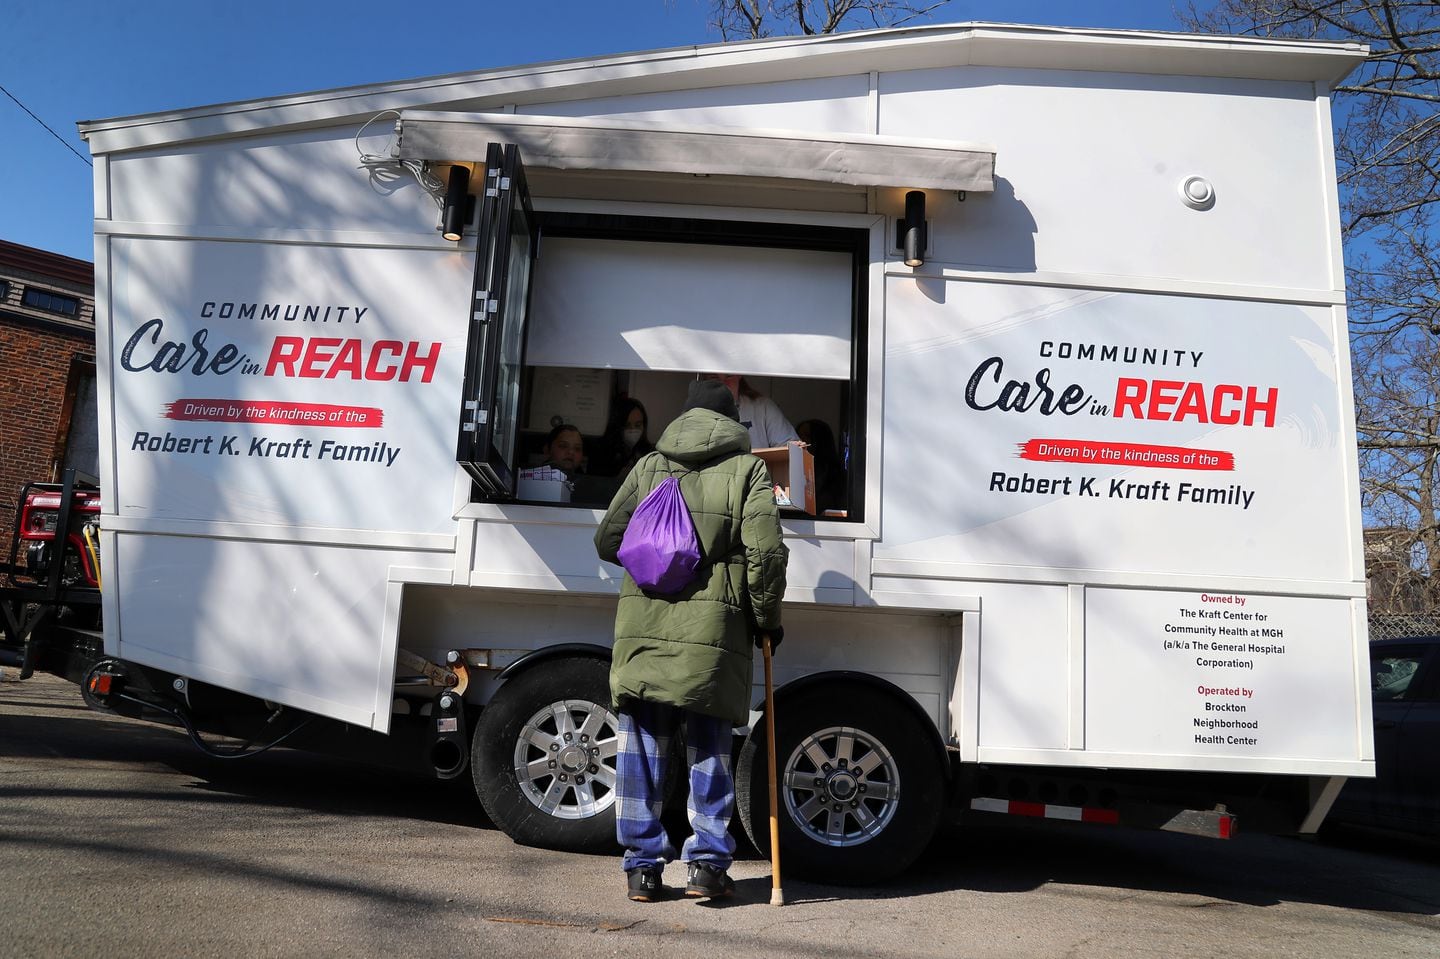 A mobile medical unit operated by the Brockton Neighborhood Neighborhood Health Center serves homeless drug users.